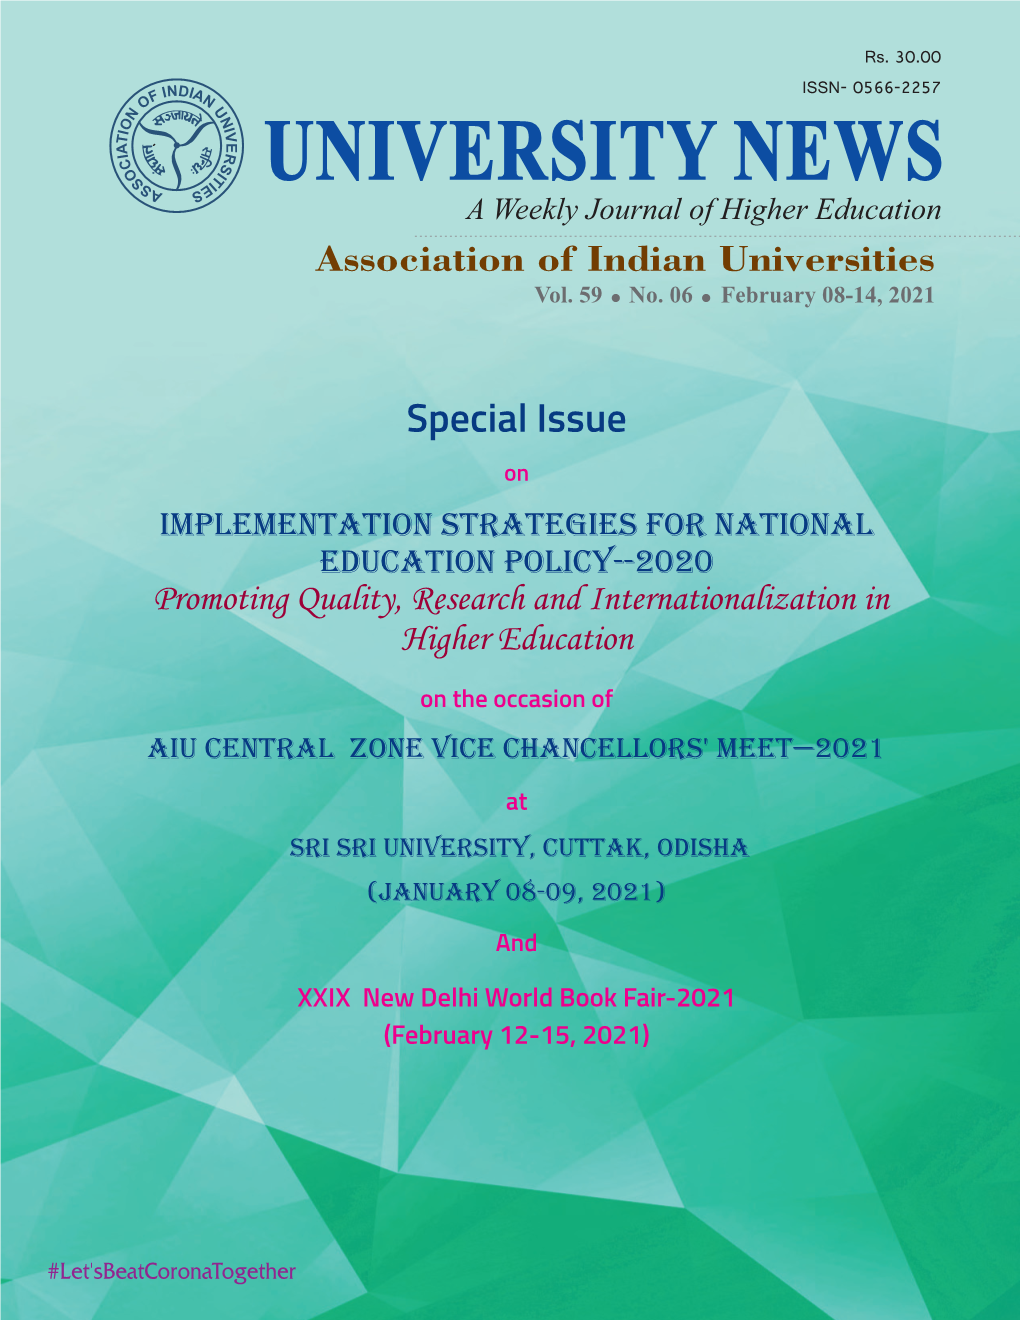 University News Vol-59, No-06, February 08-14, 2021